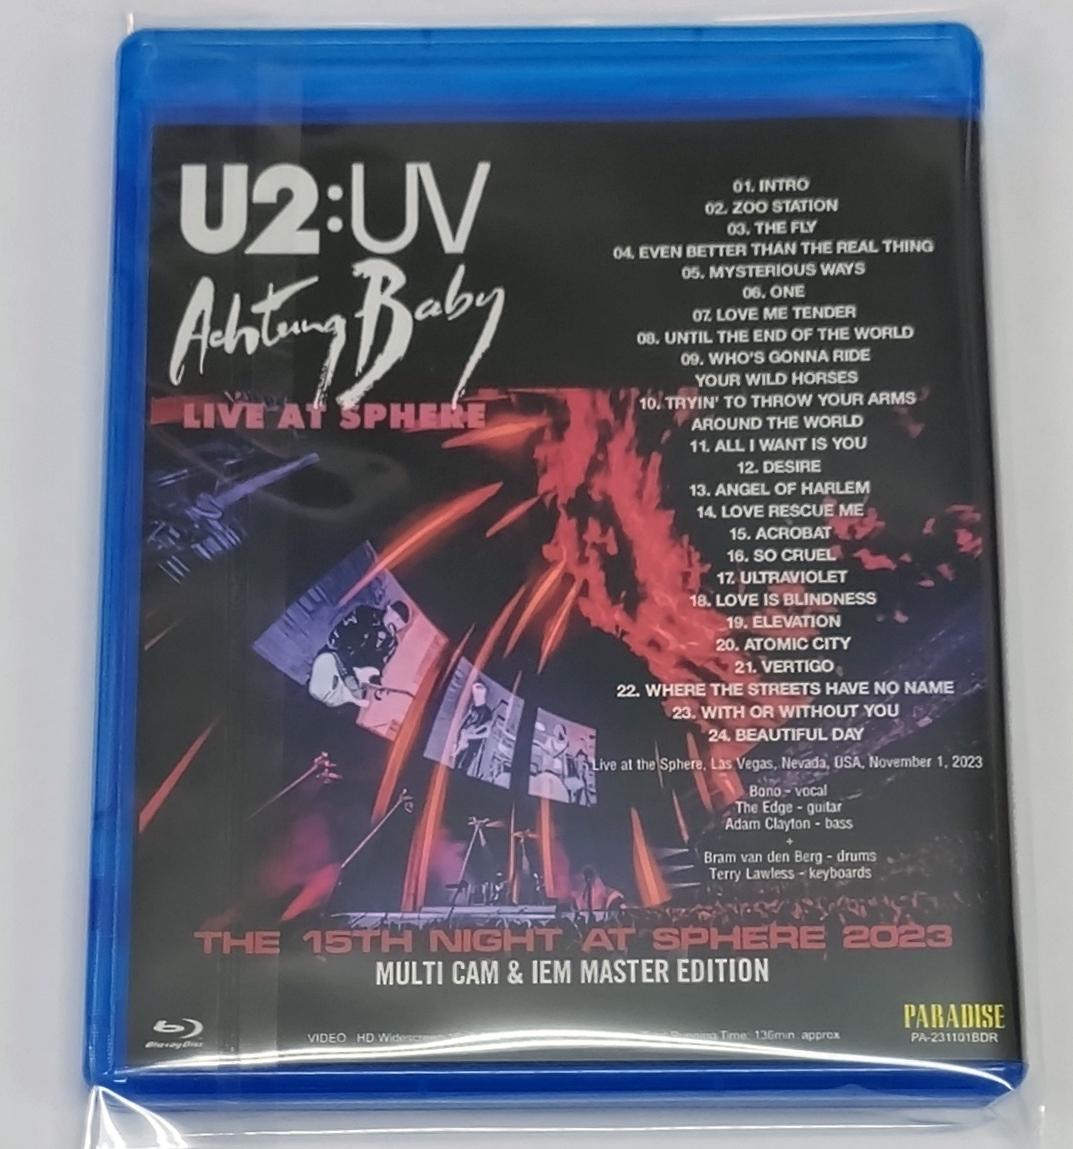 U2 / U2:UV ACHTUNG BABY - THE 15TH NIGHT AT SPHERE 2023 : MULTI CAM & IEM MASTER EDITION (BDR)  の画像2